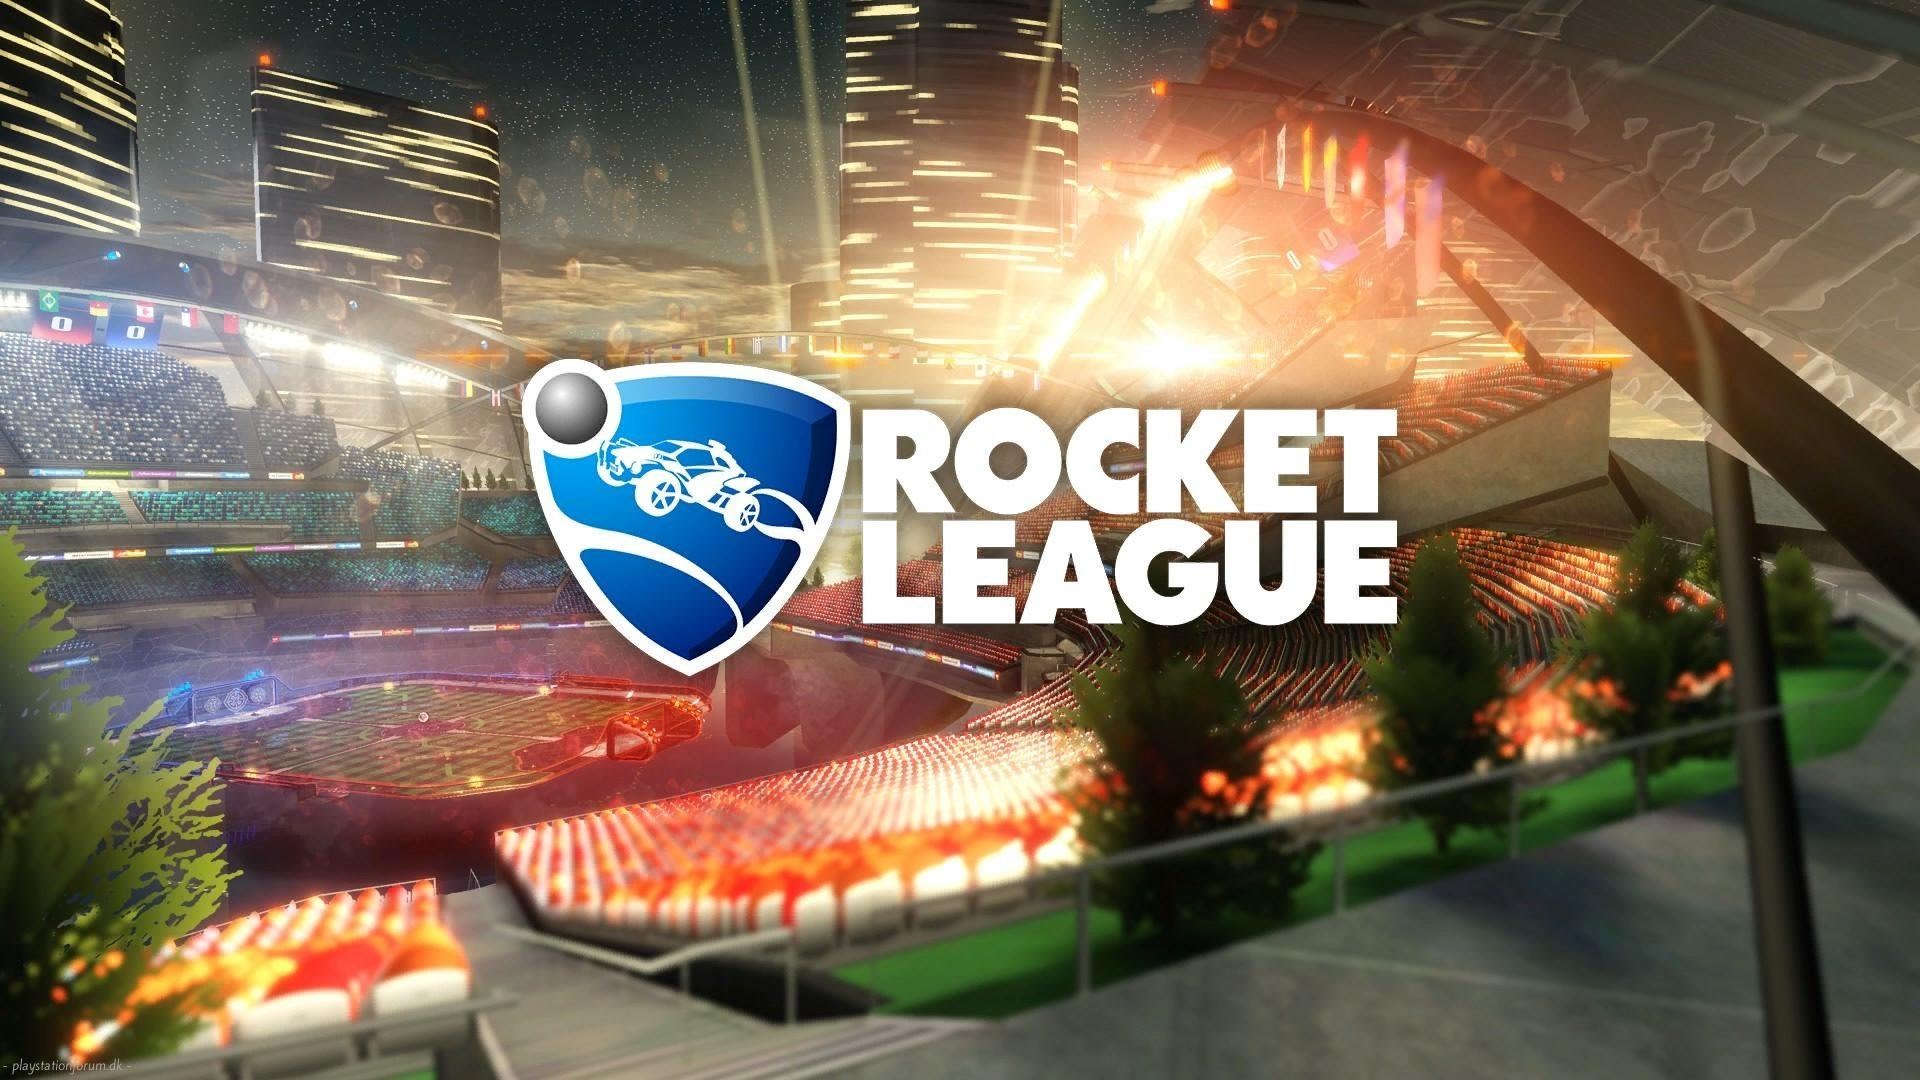 Rocket League image.jpg